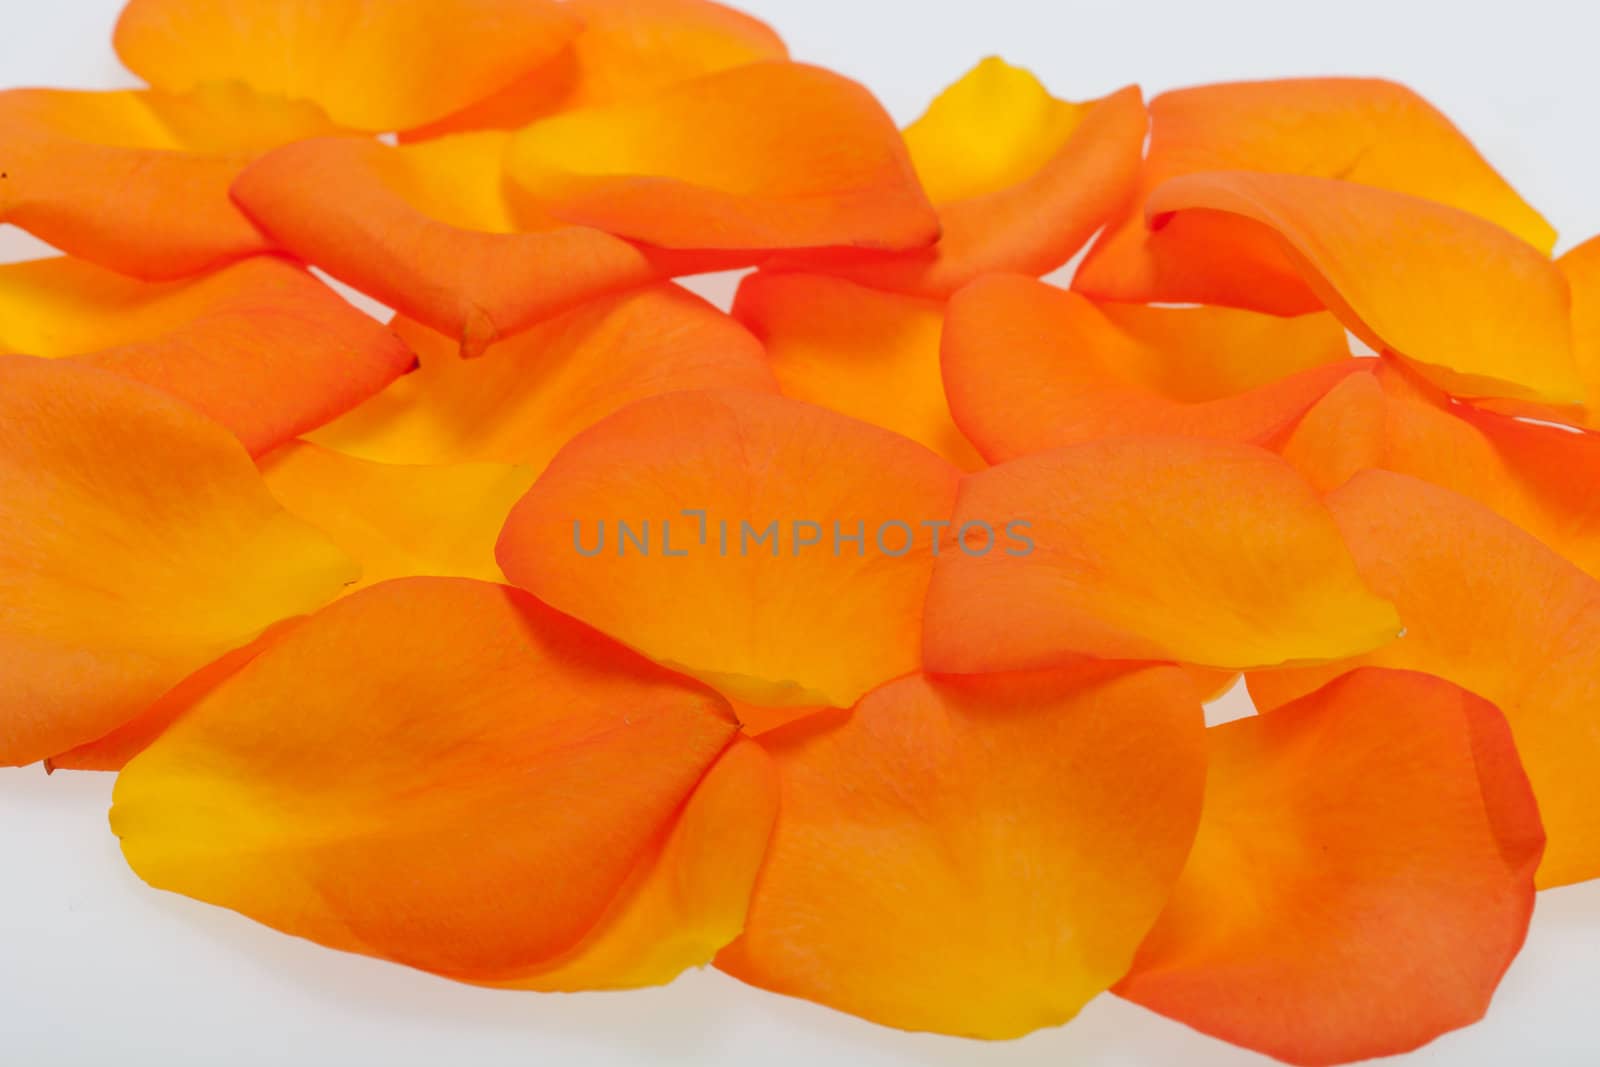 Petals of the orange-rose  by wjarek